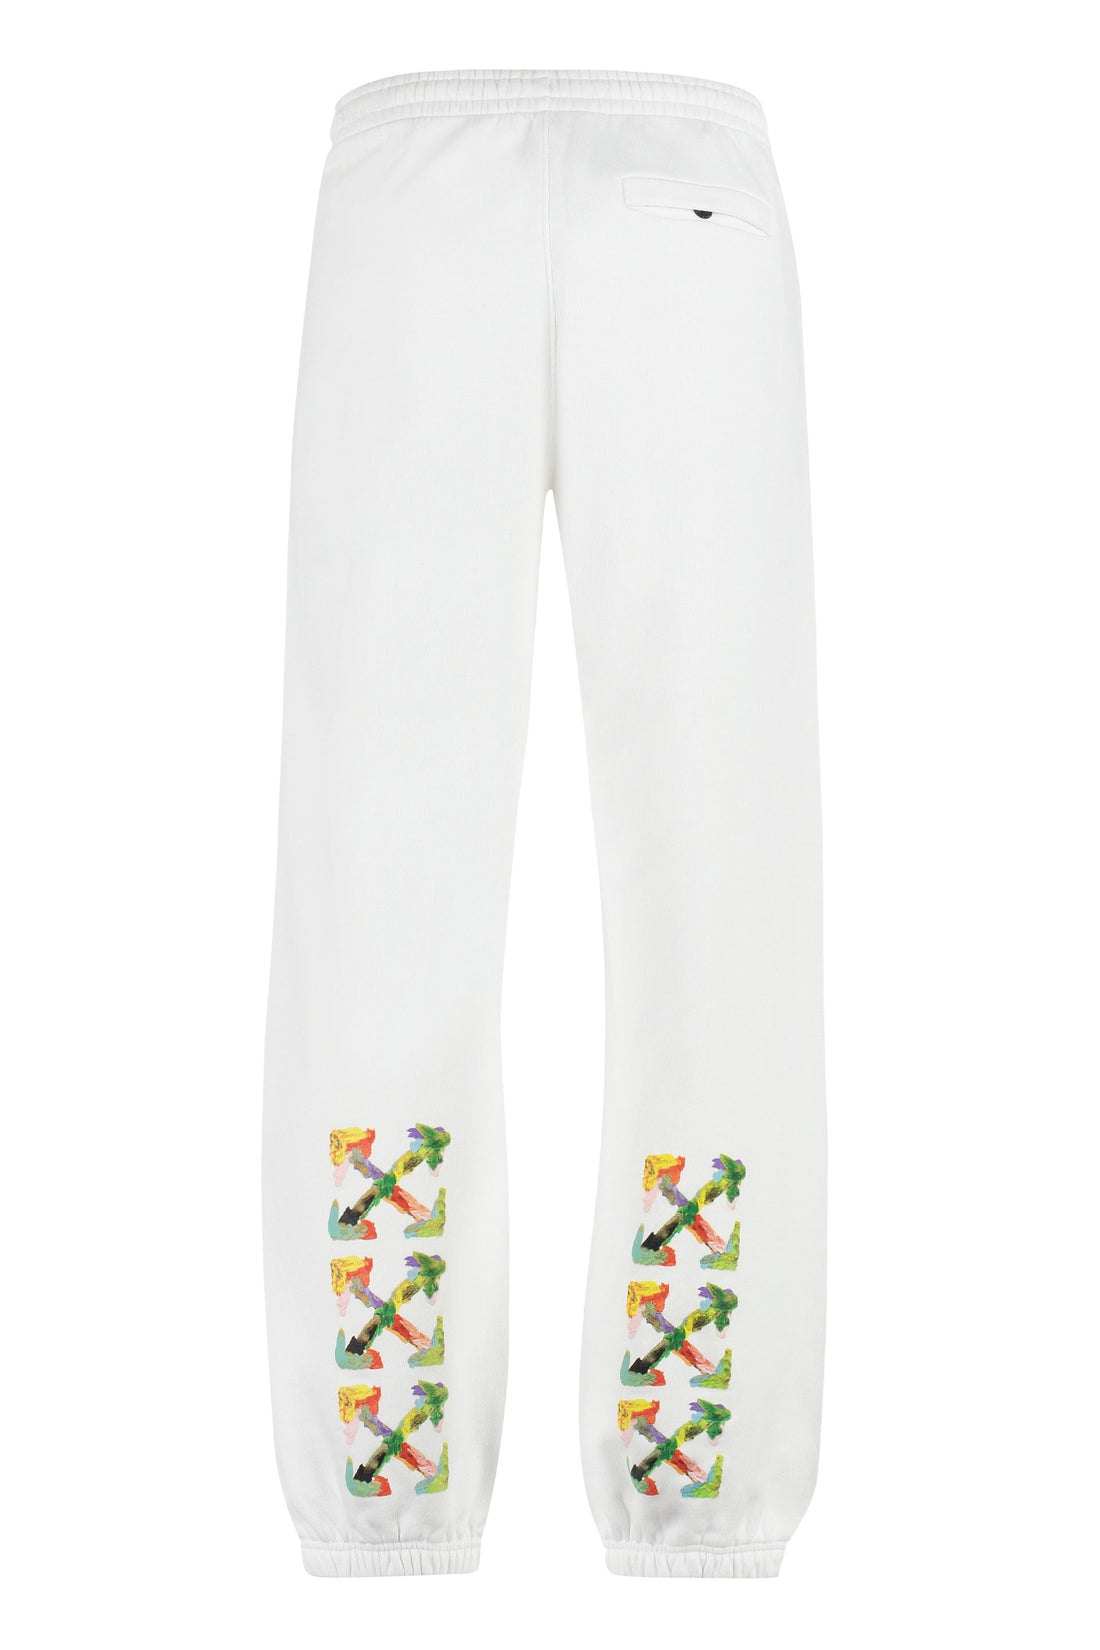 Off-White-OUTLET-SALE-Jersey sweatpants-ARCHIVIST